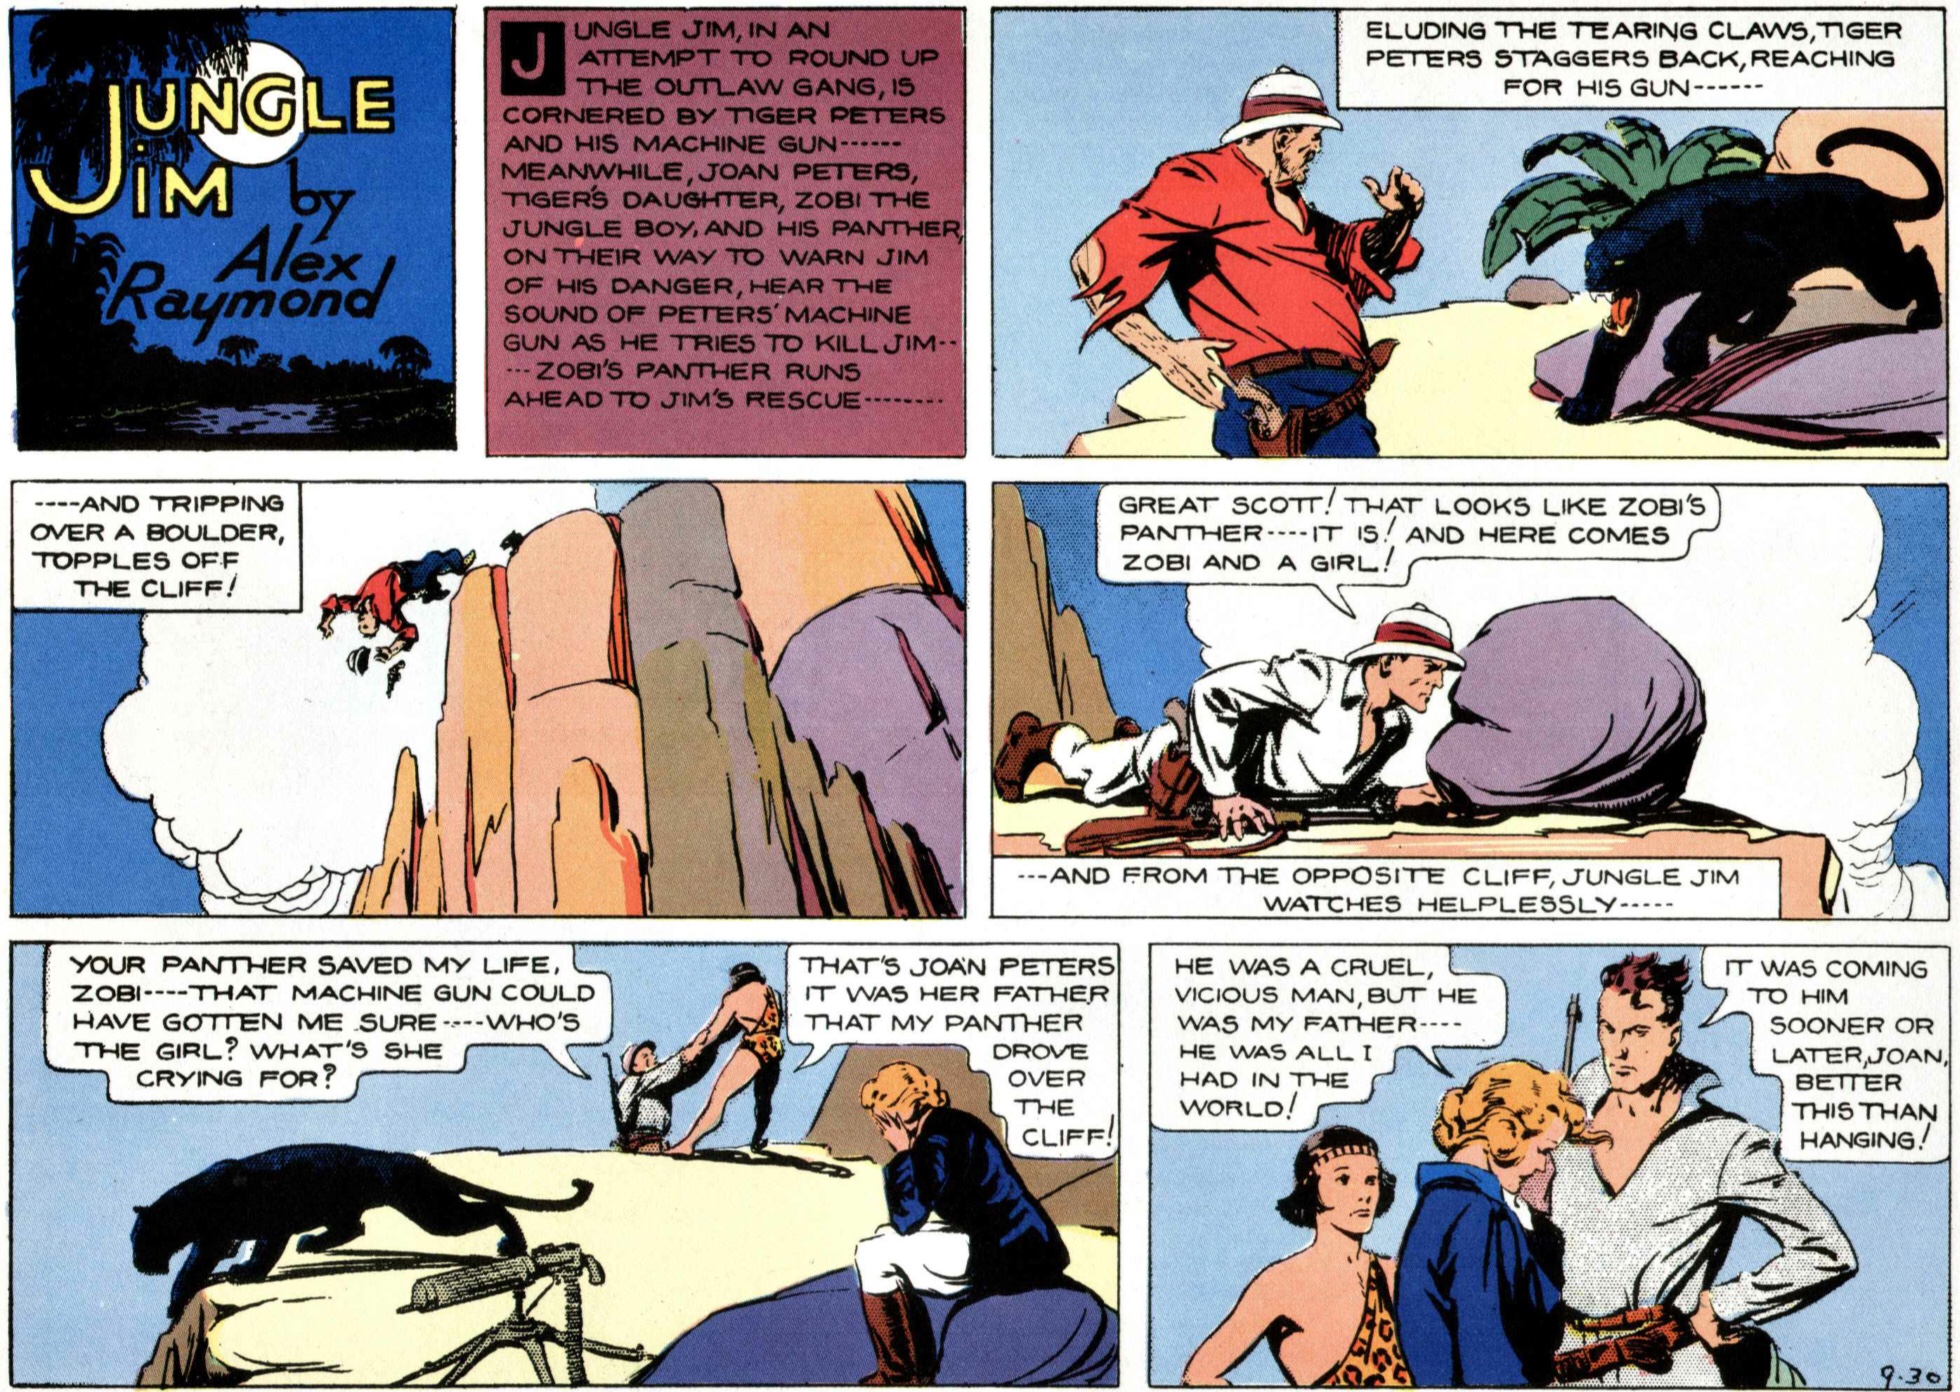 Jungle Jim episod-guide: Det dramatiska slutet 30 september 1934, på episoden om hotet mot Wilsons guldgruva, tredje episoden i Jungle Jim episod-guide